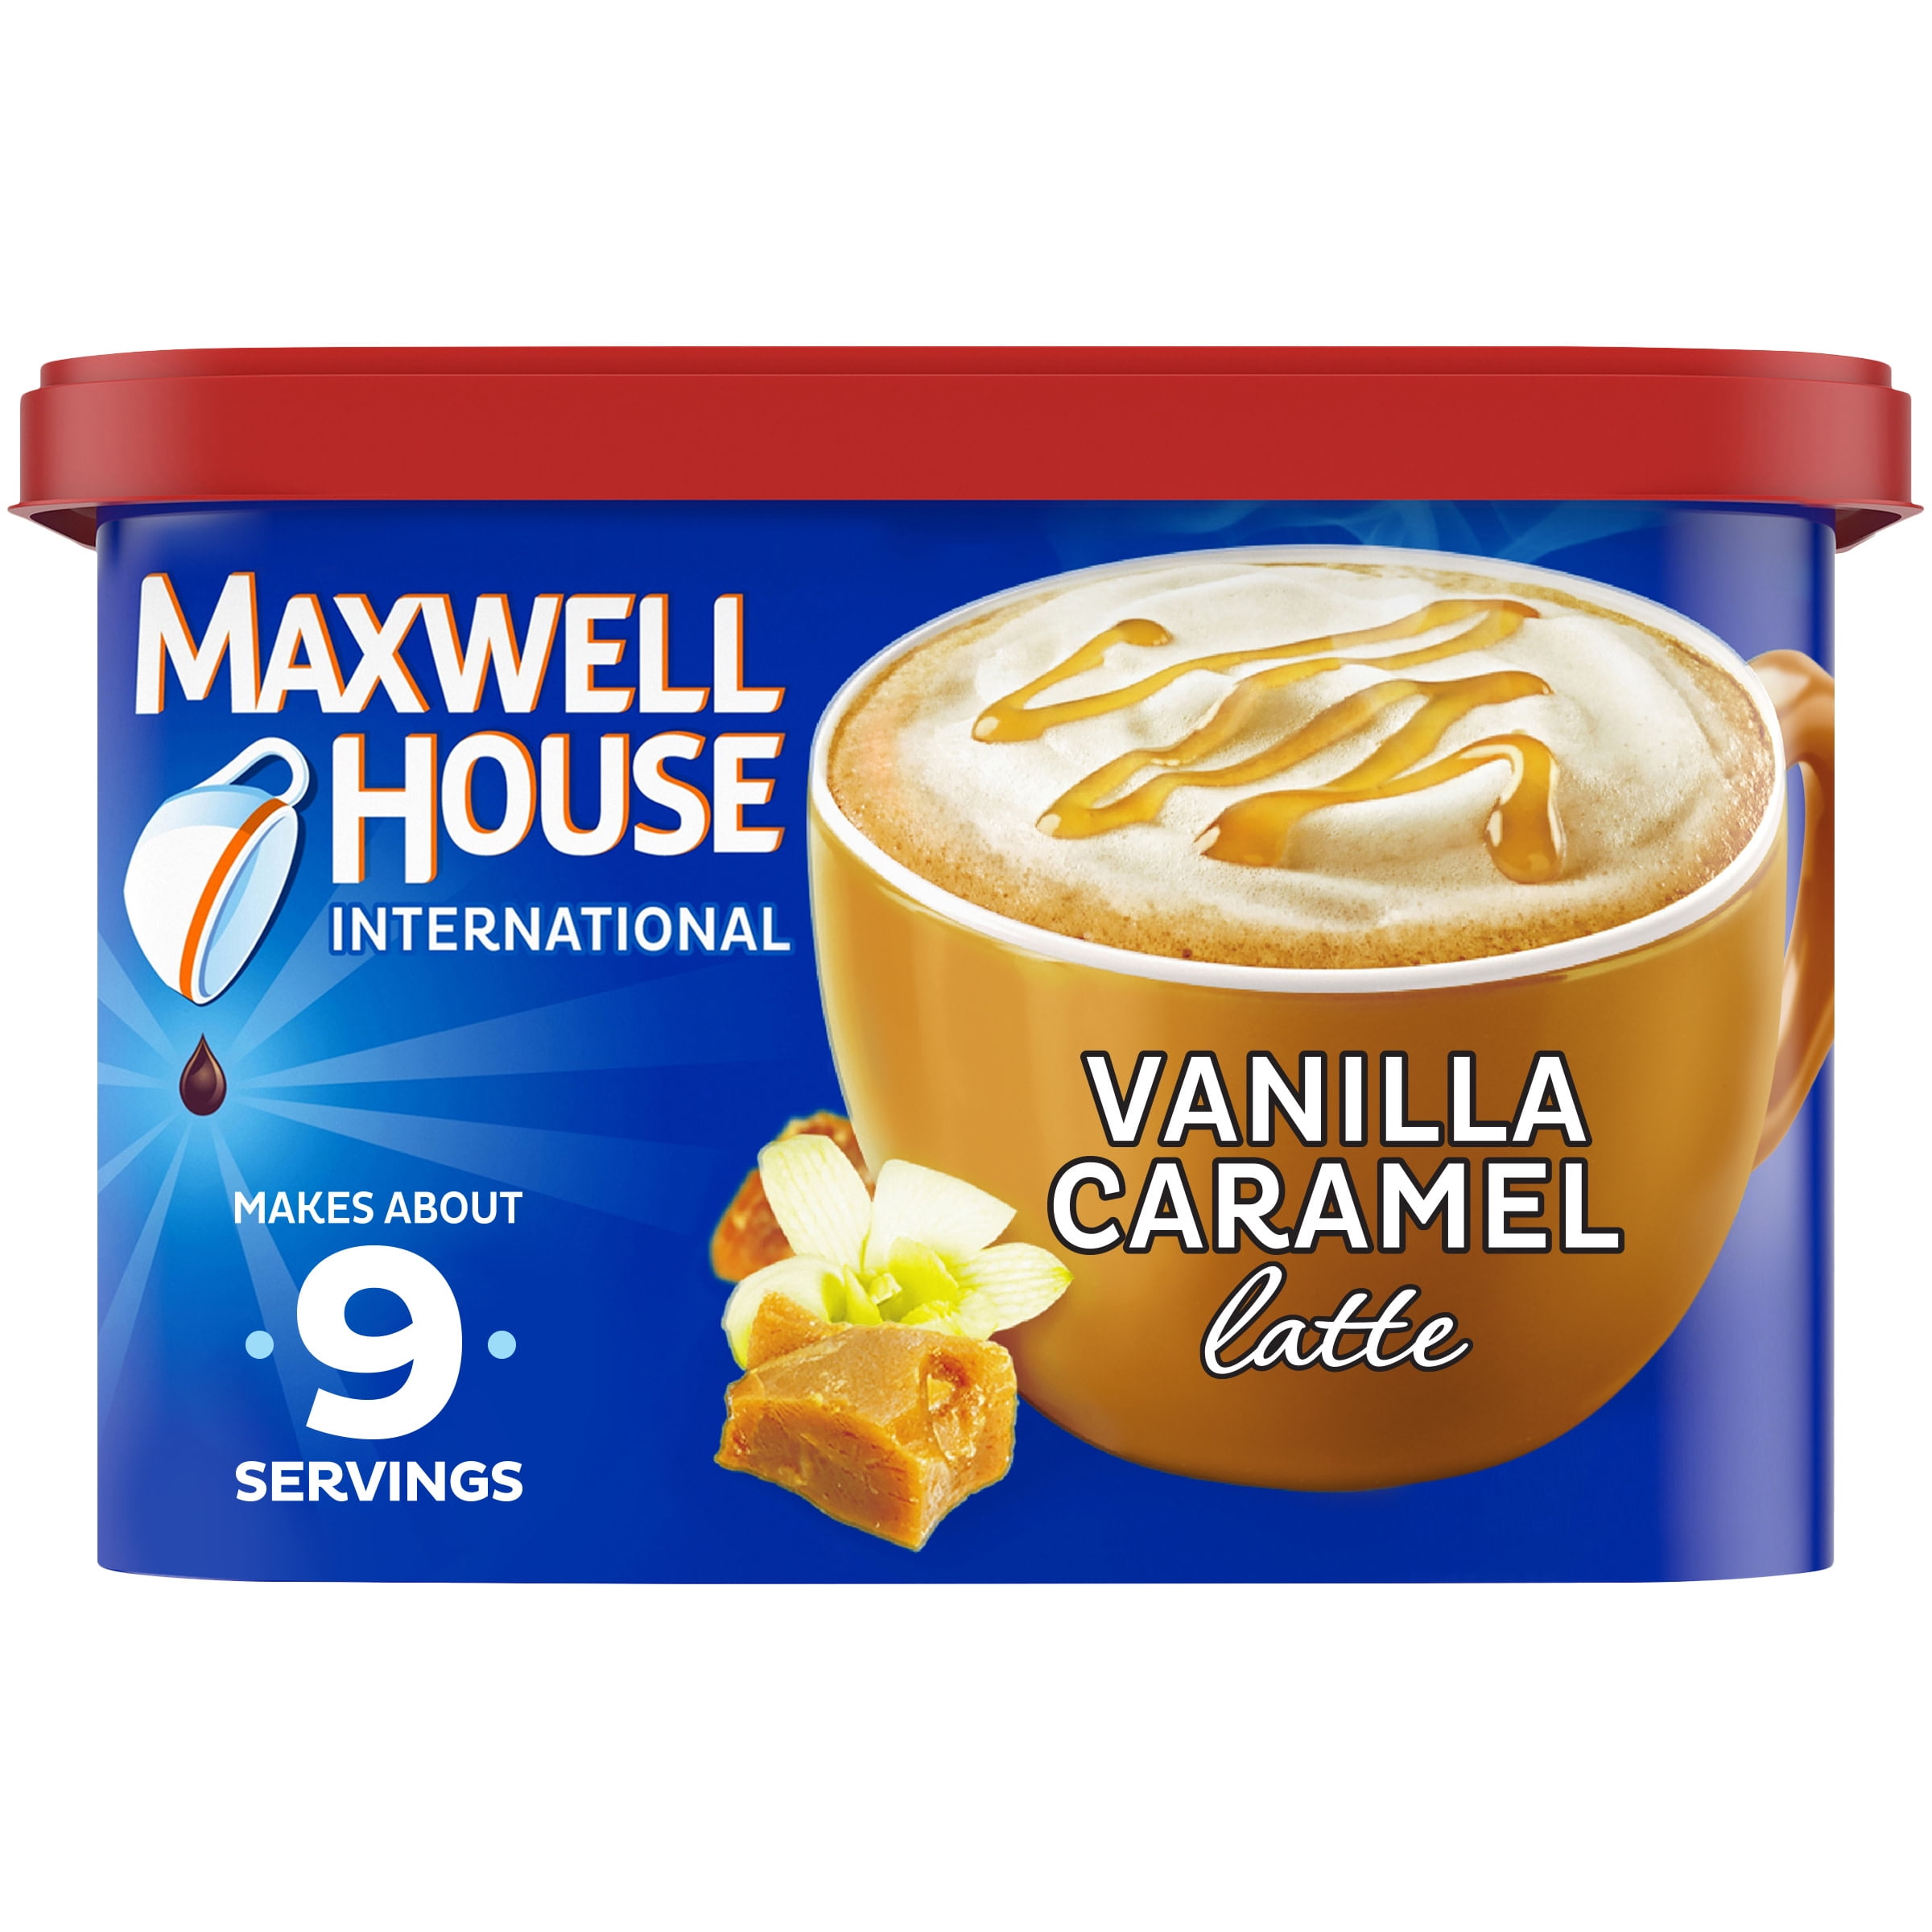 Café dosettes latte macchiato caramel MAXWELL HOUSE TASSIMO : le